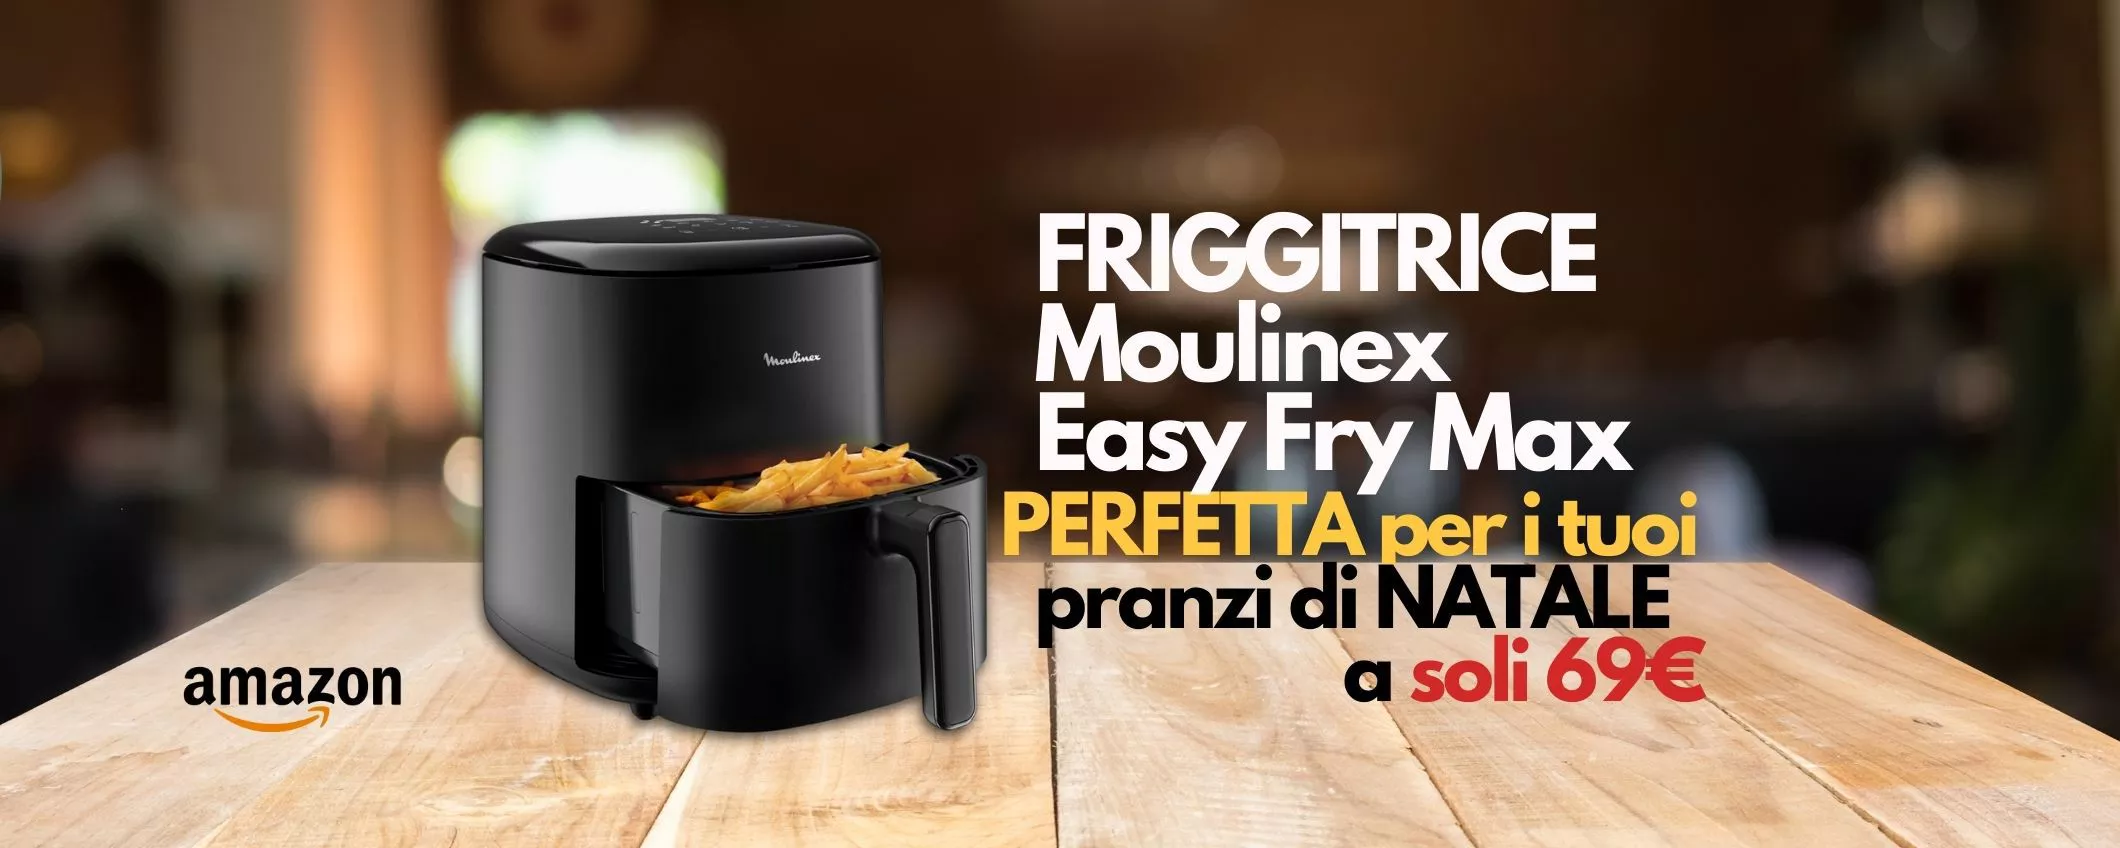 FRIGGITRICE Moulinex digitale Easy Fry Max a soli 59€: offerta